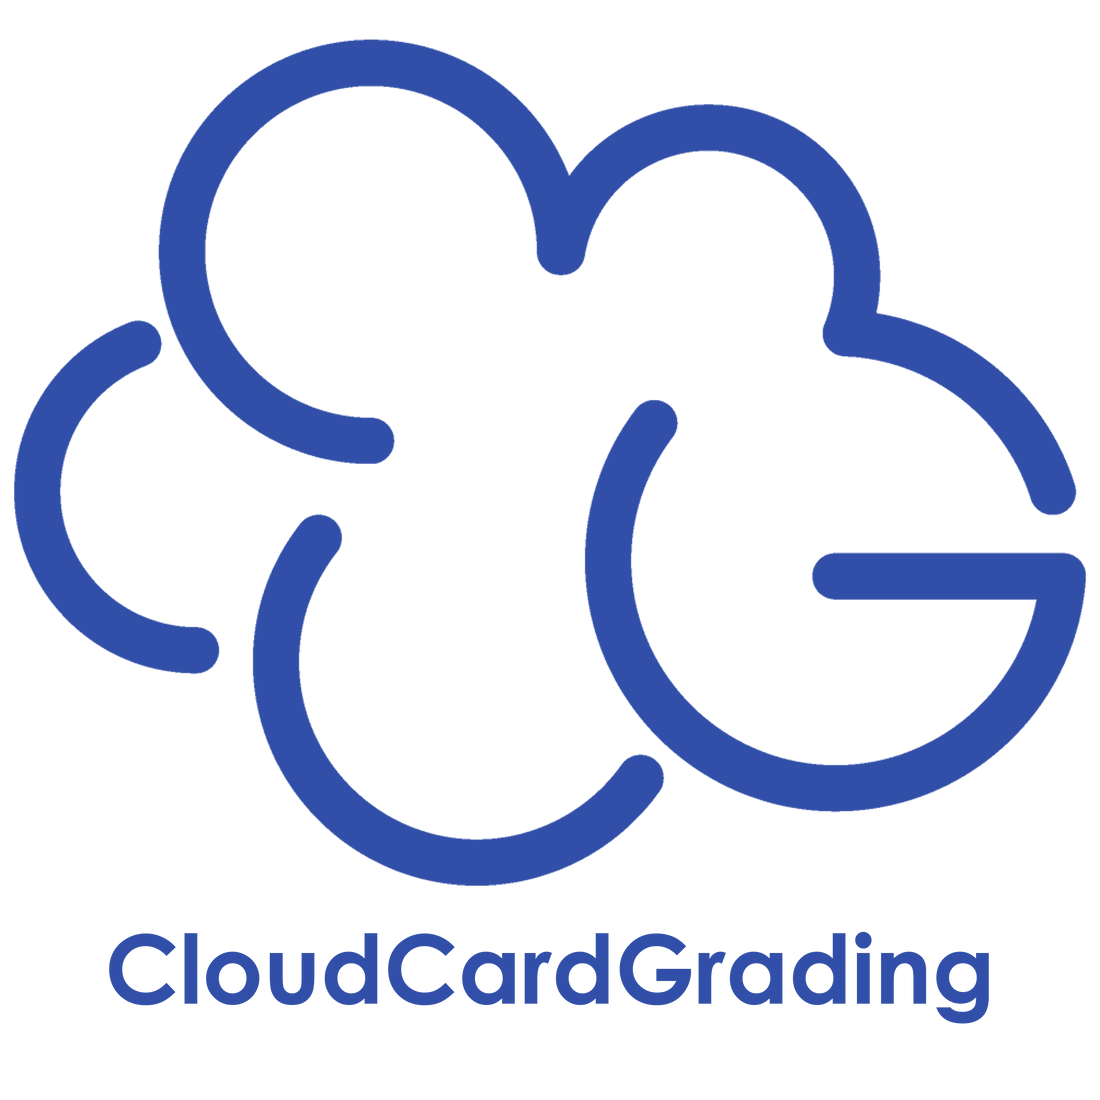 CloudCardGrading